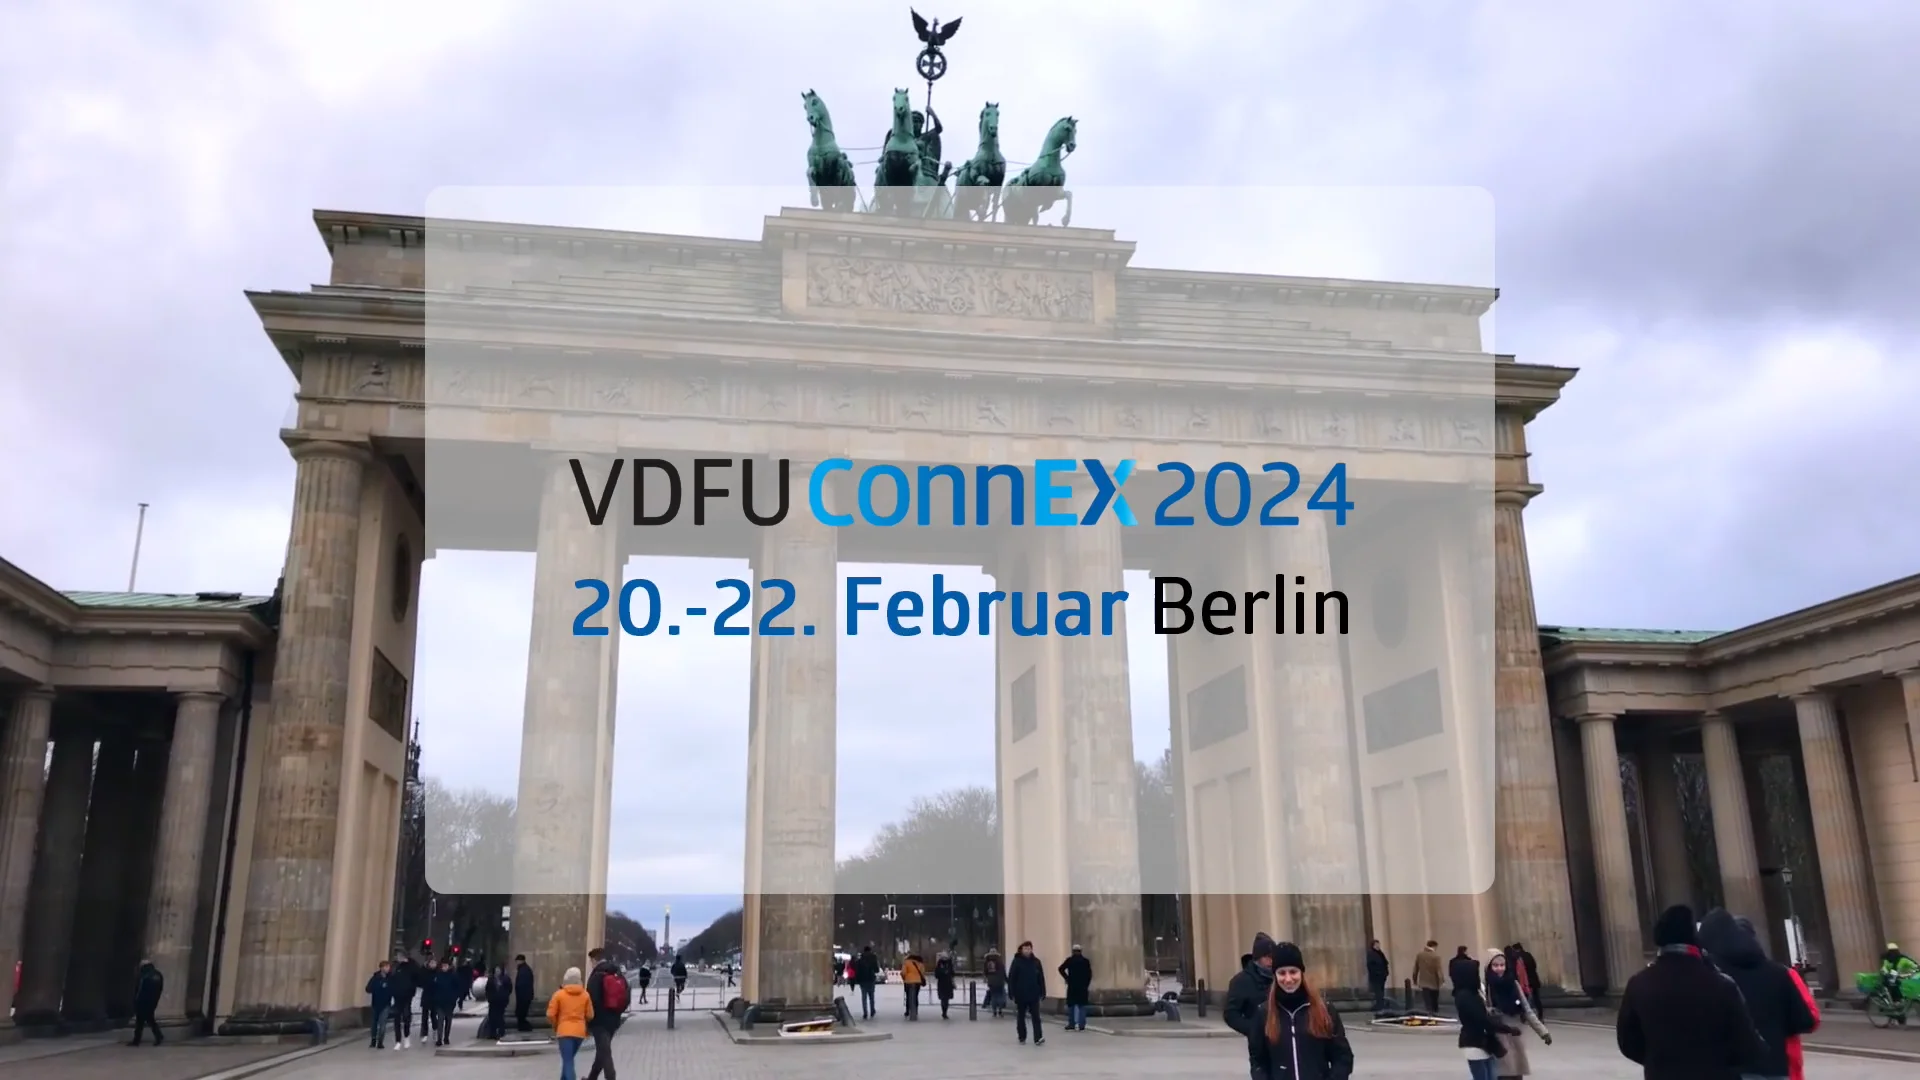 VDFU ConnEX 2024 in Berlin on Vimeo